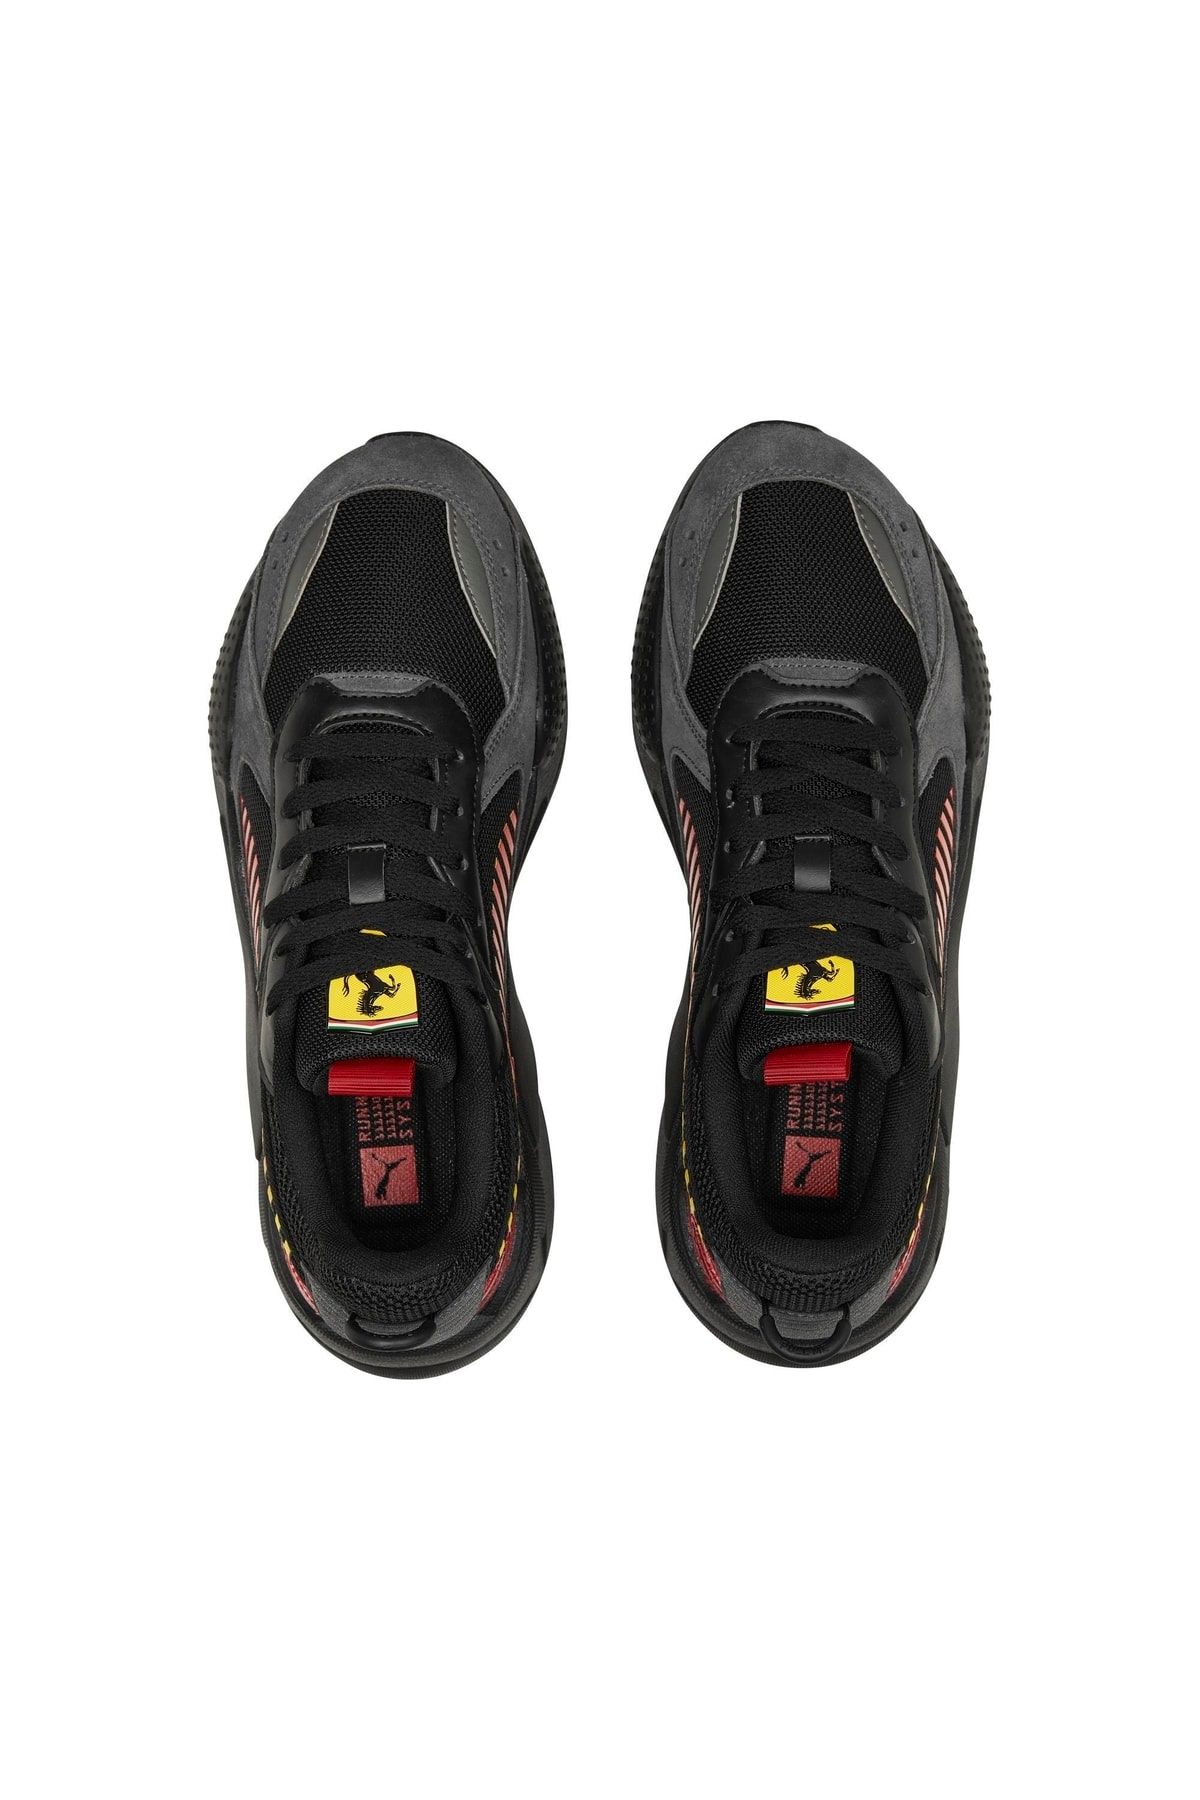 Puma Ferrari Rs-x Siyah Günlük Spor Ayakkabı